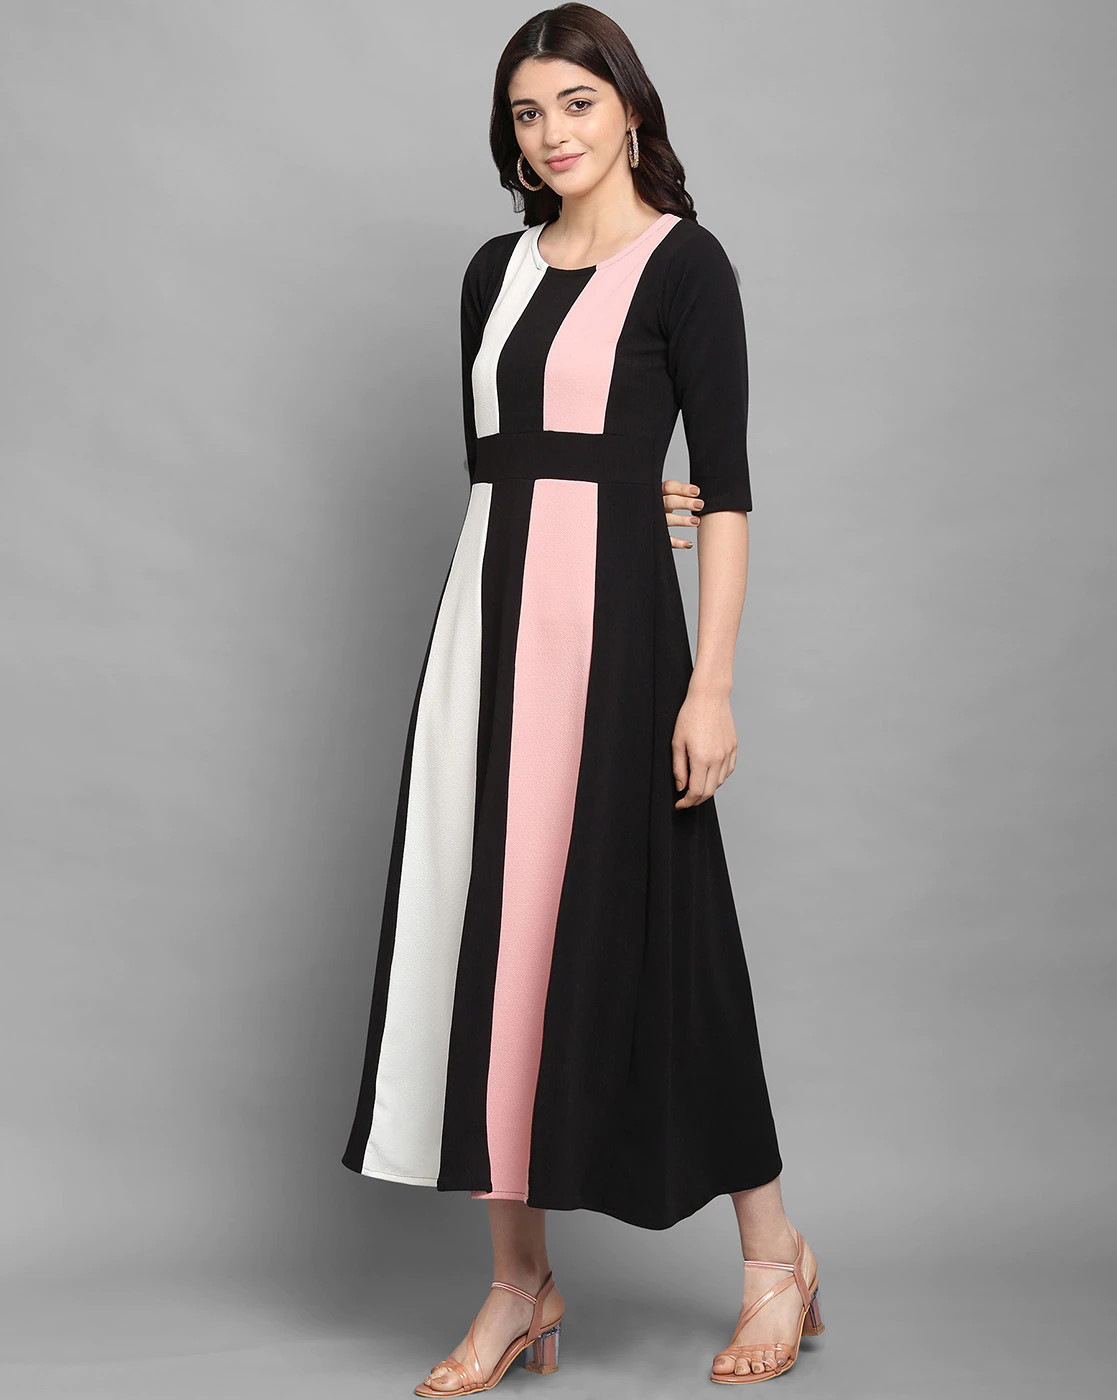 Buy PURVAJA Striped Round-Neck Empire Dress